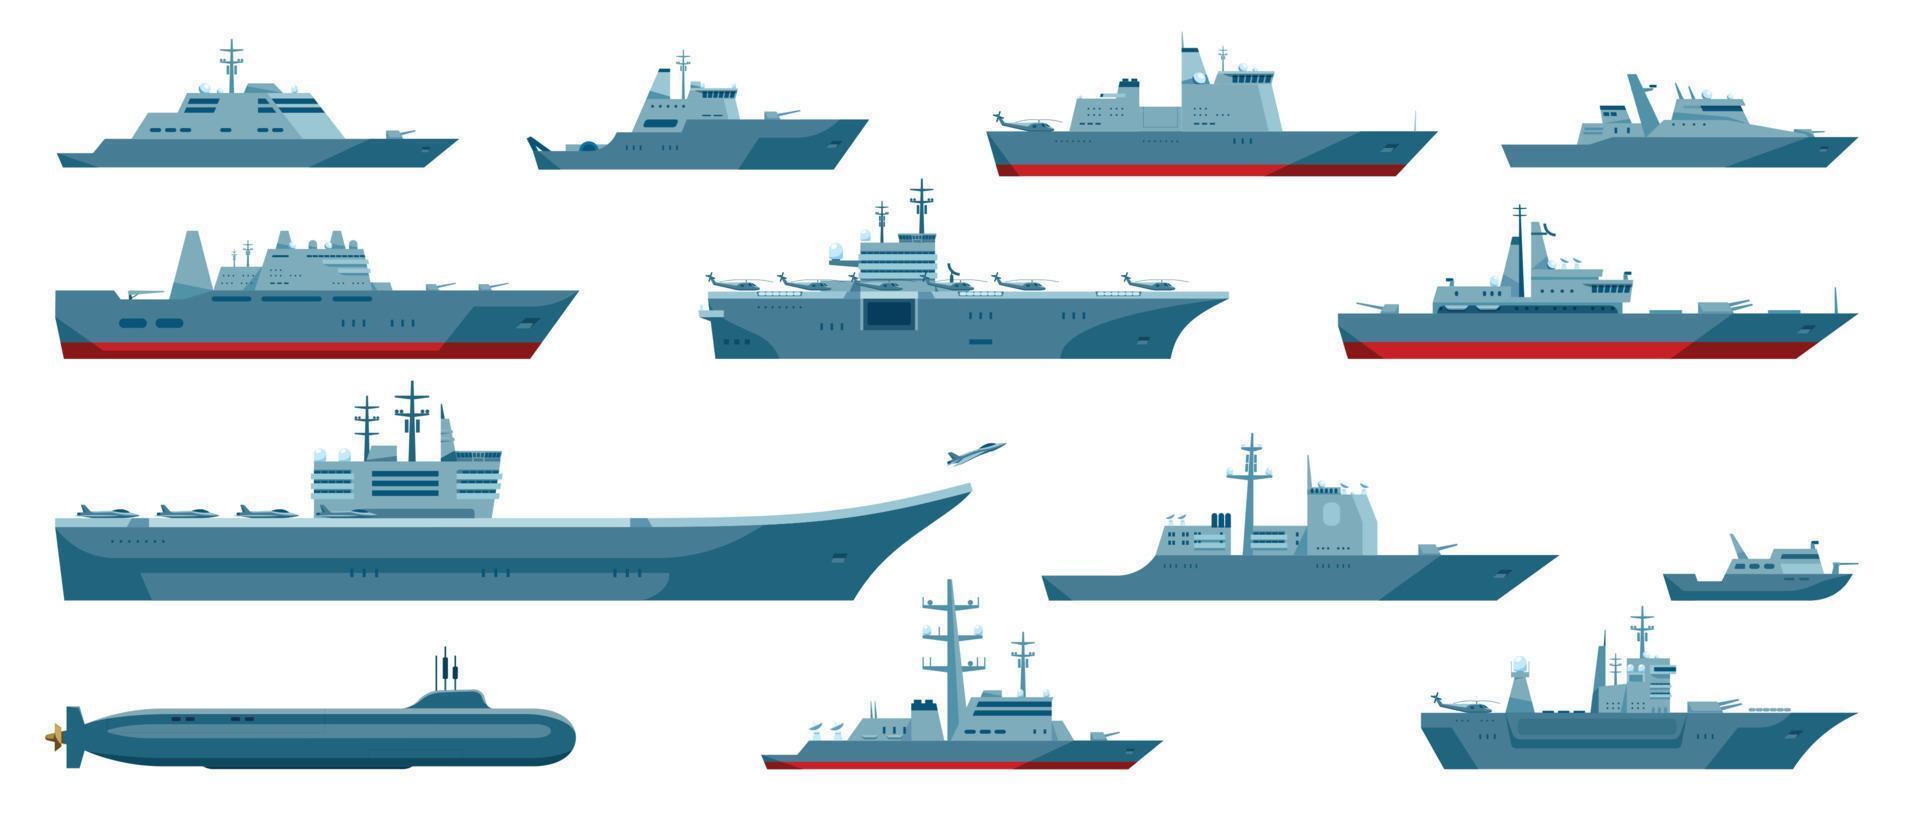 Military boats. Aircraft carrier, warship, navy frigate, battleship, submarine, war vessel. Naval combat ships or frigates vector set